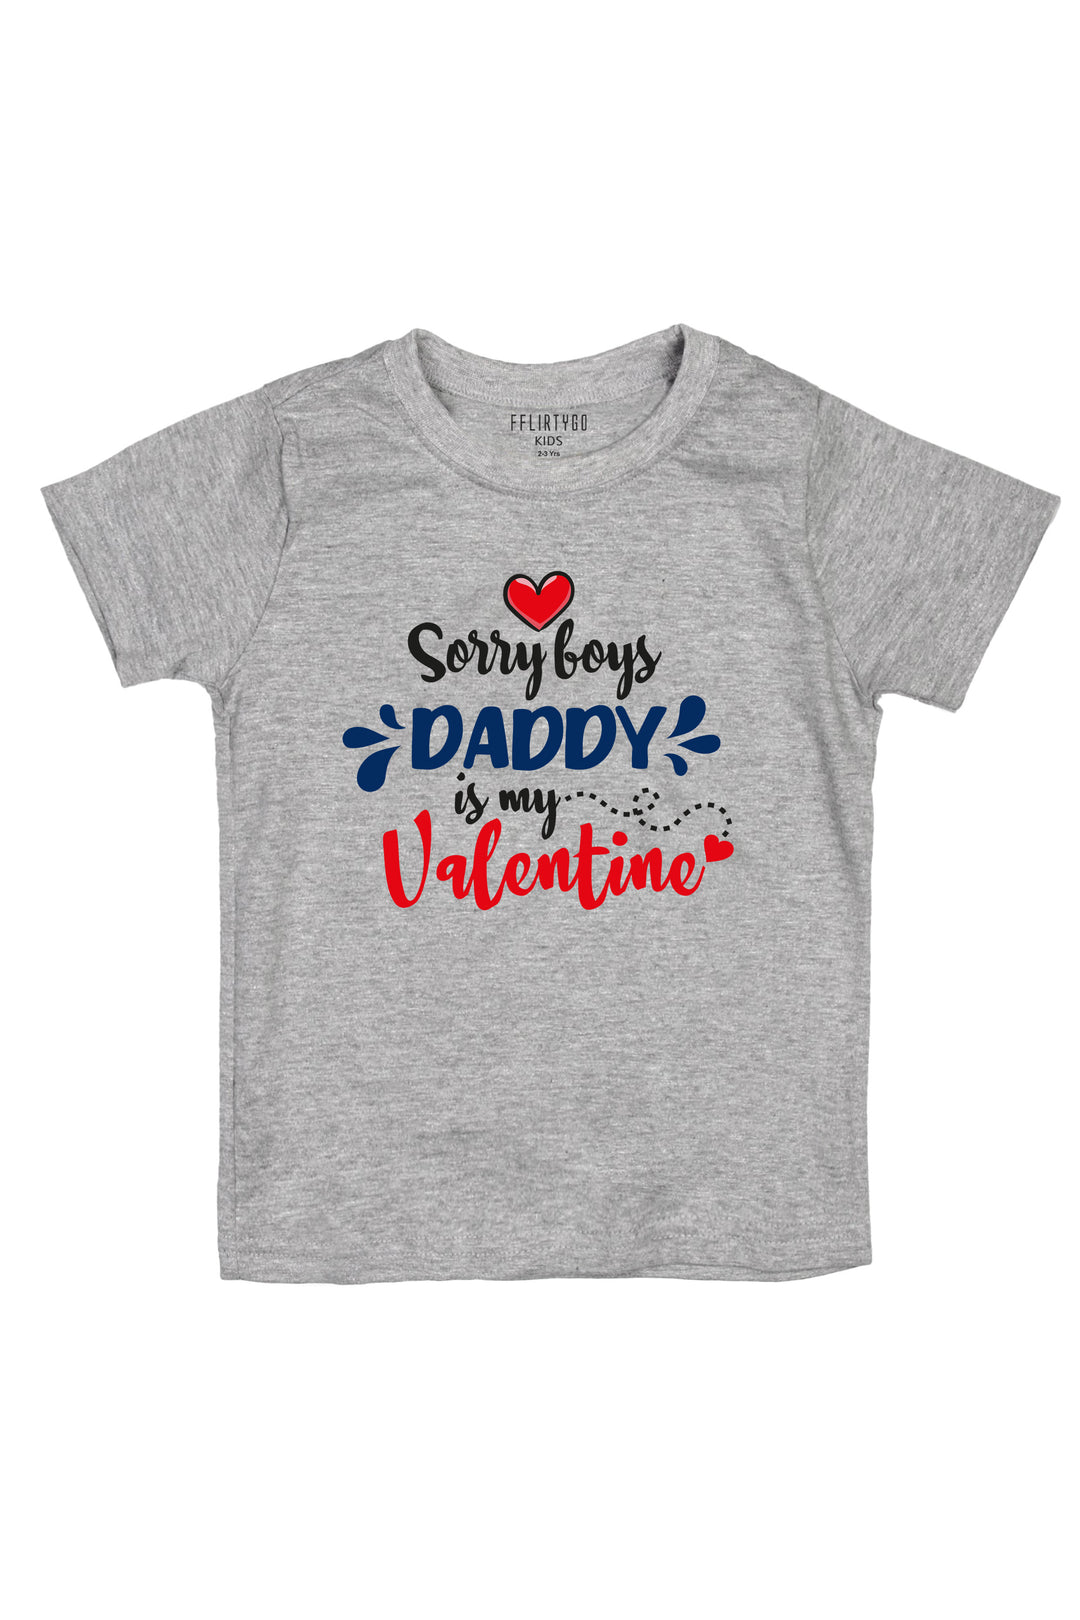 Sorry Boys Baddy Is My Valentine Kids T Shirt